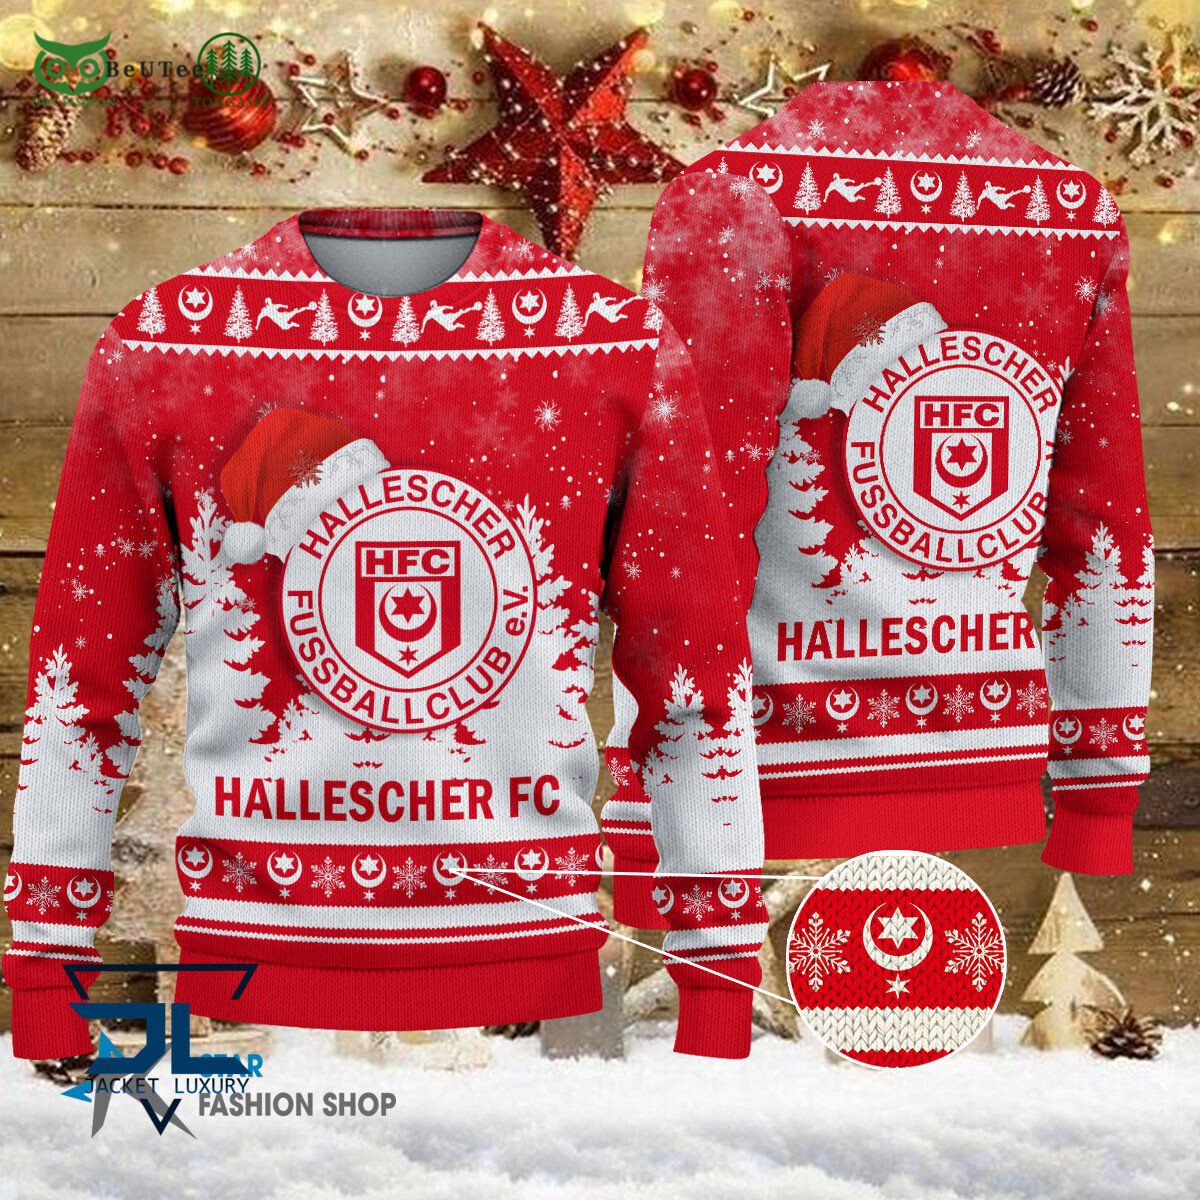 hallescher fc bundesliga champions ugly sweater 1 MctRv